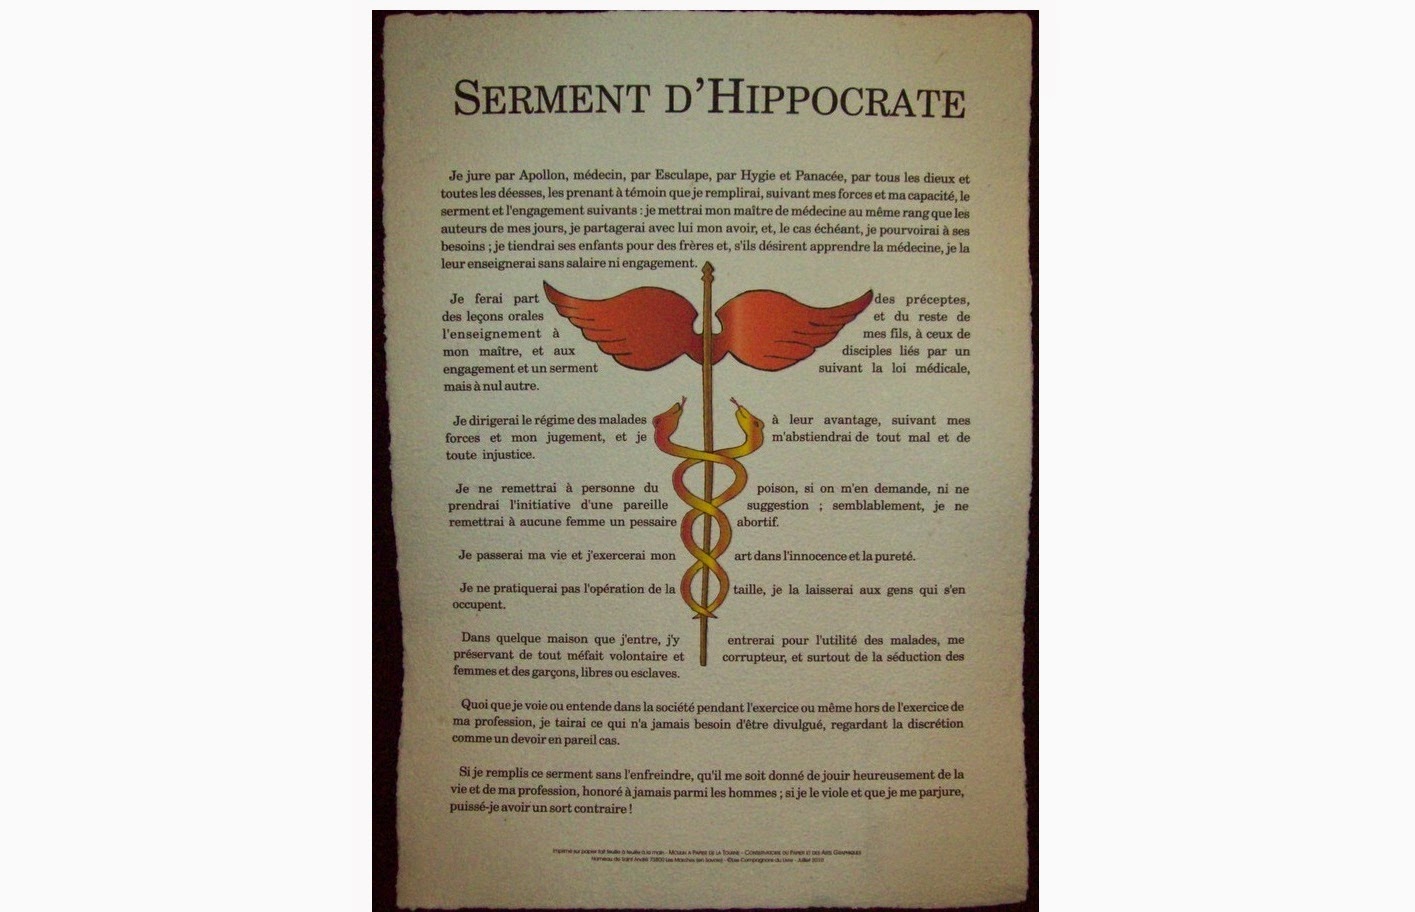 ------ Serment d'hippocrate ------